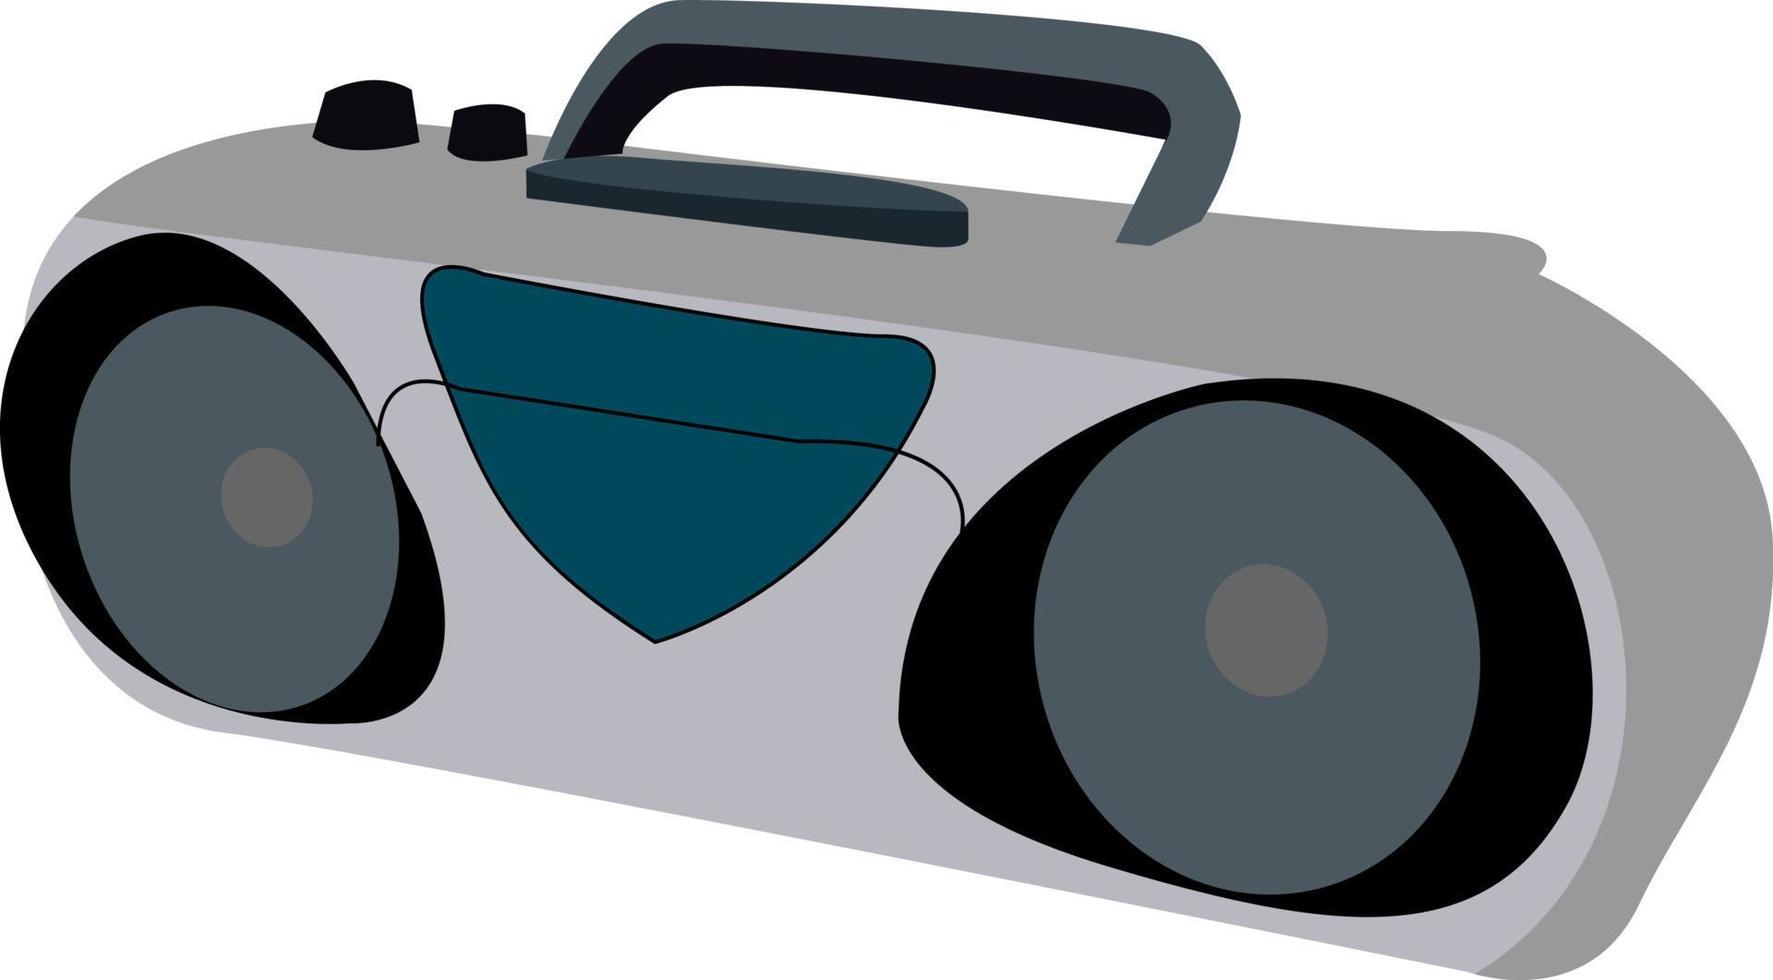 Old tape recorder, illustration, vector on white background.